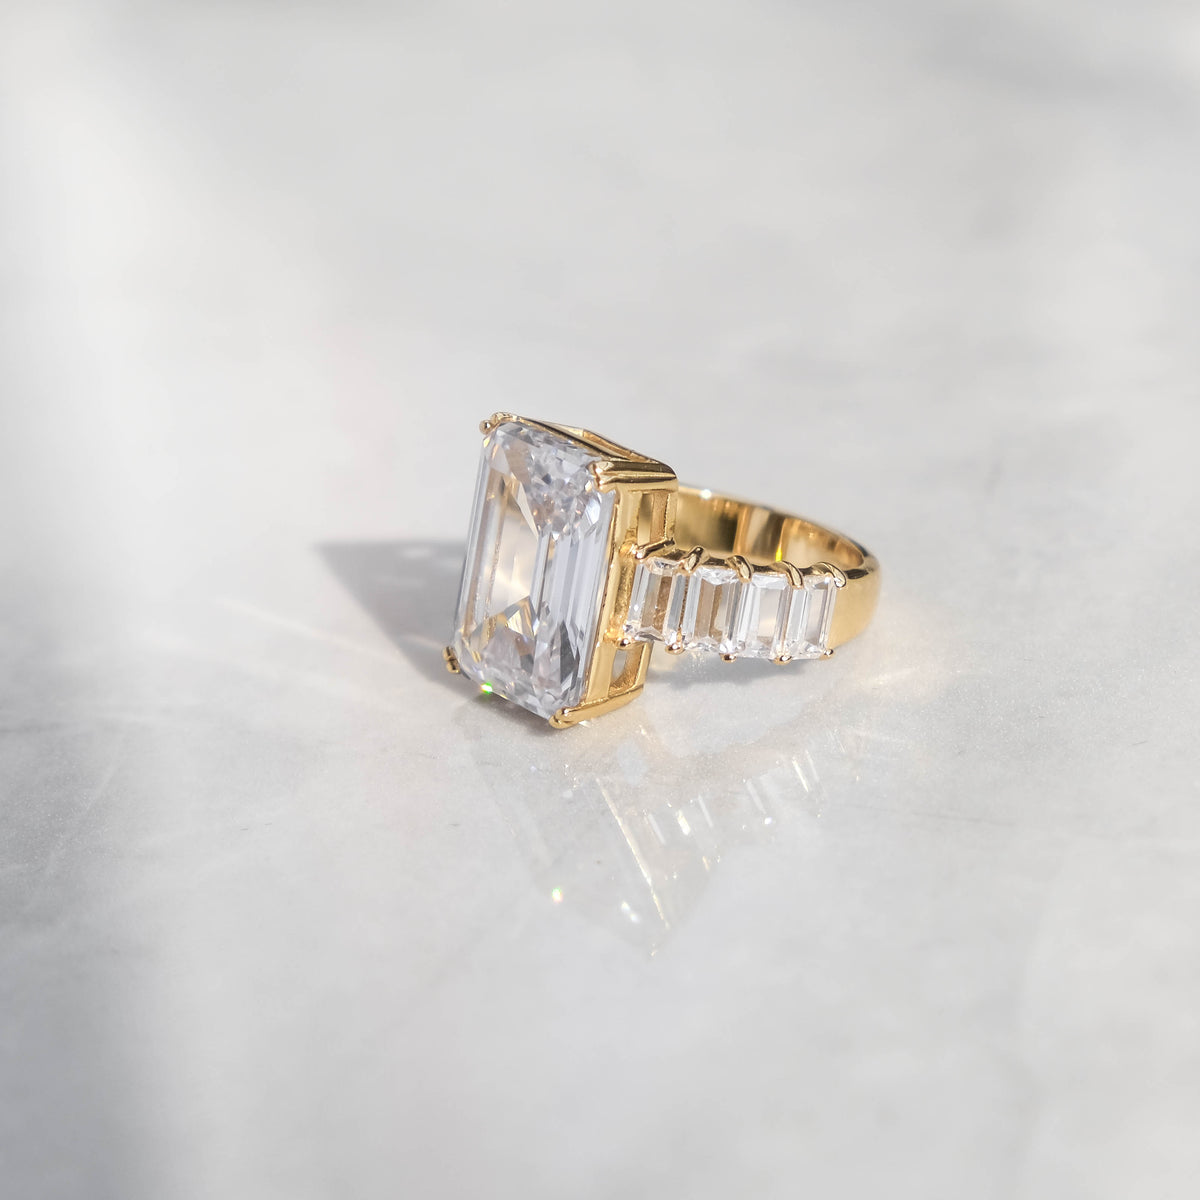 Emerald Cut Diamond Ring - 6IX ICE